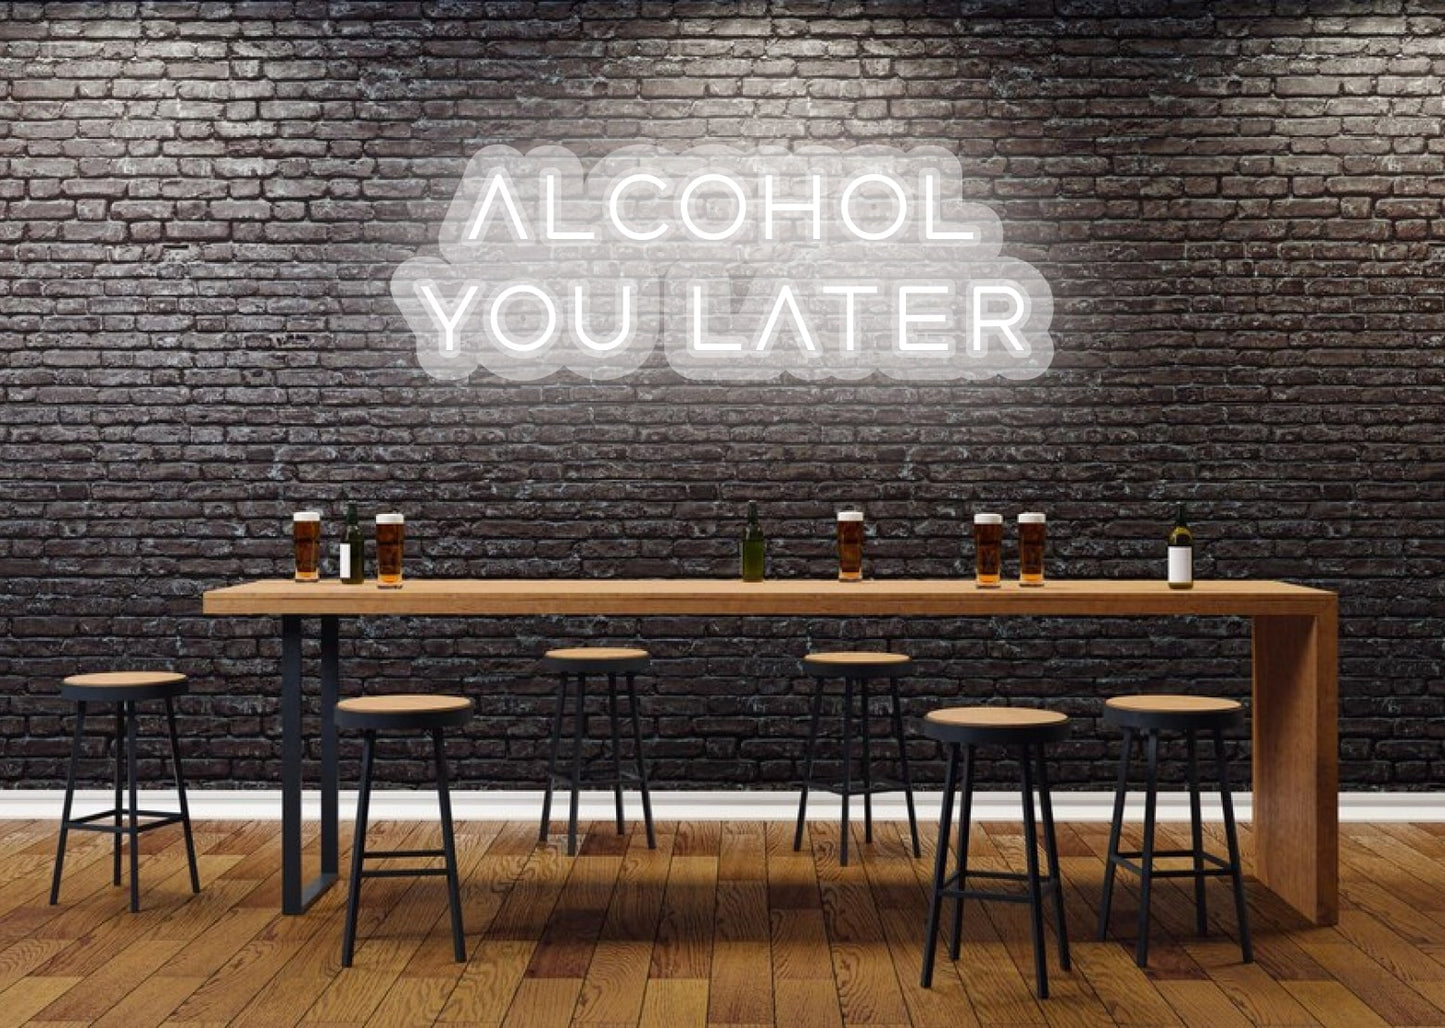 Alcohol you later White Bar Neon Sign Light | OMG Custom Neon Sign